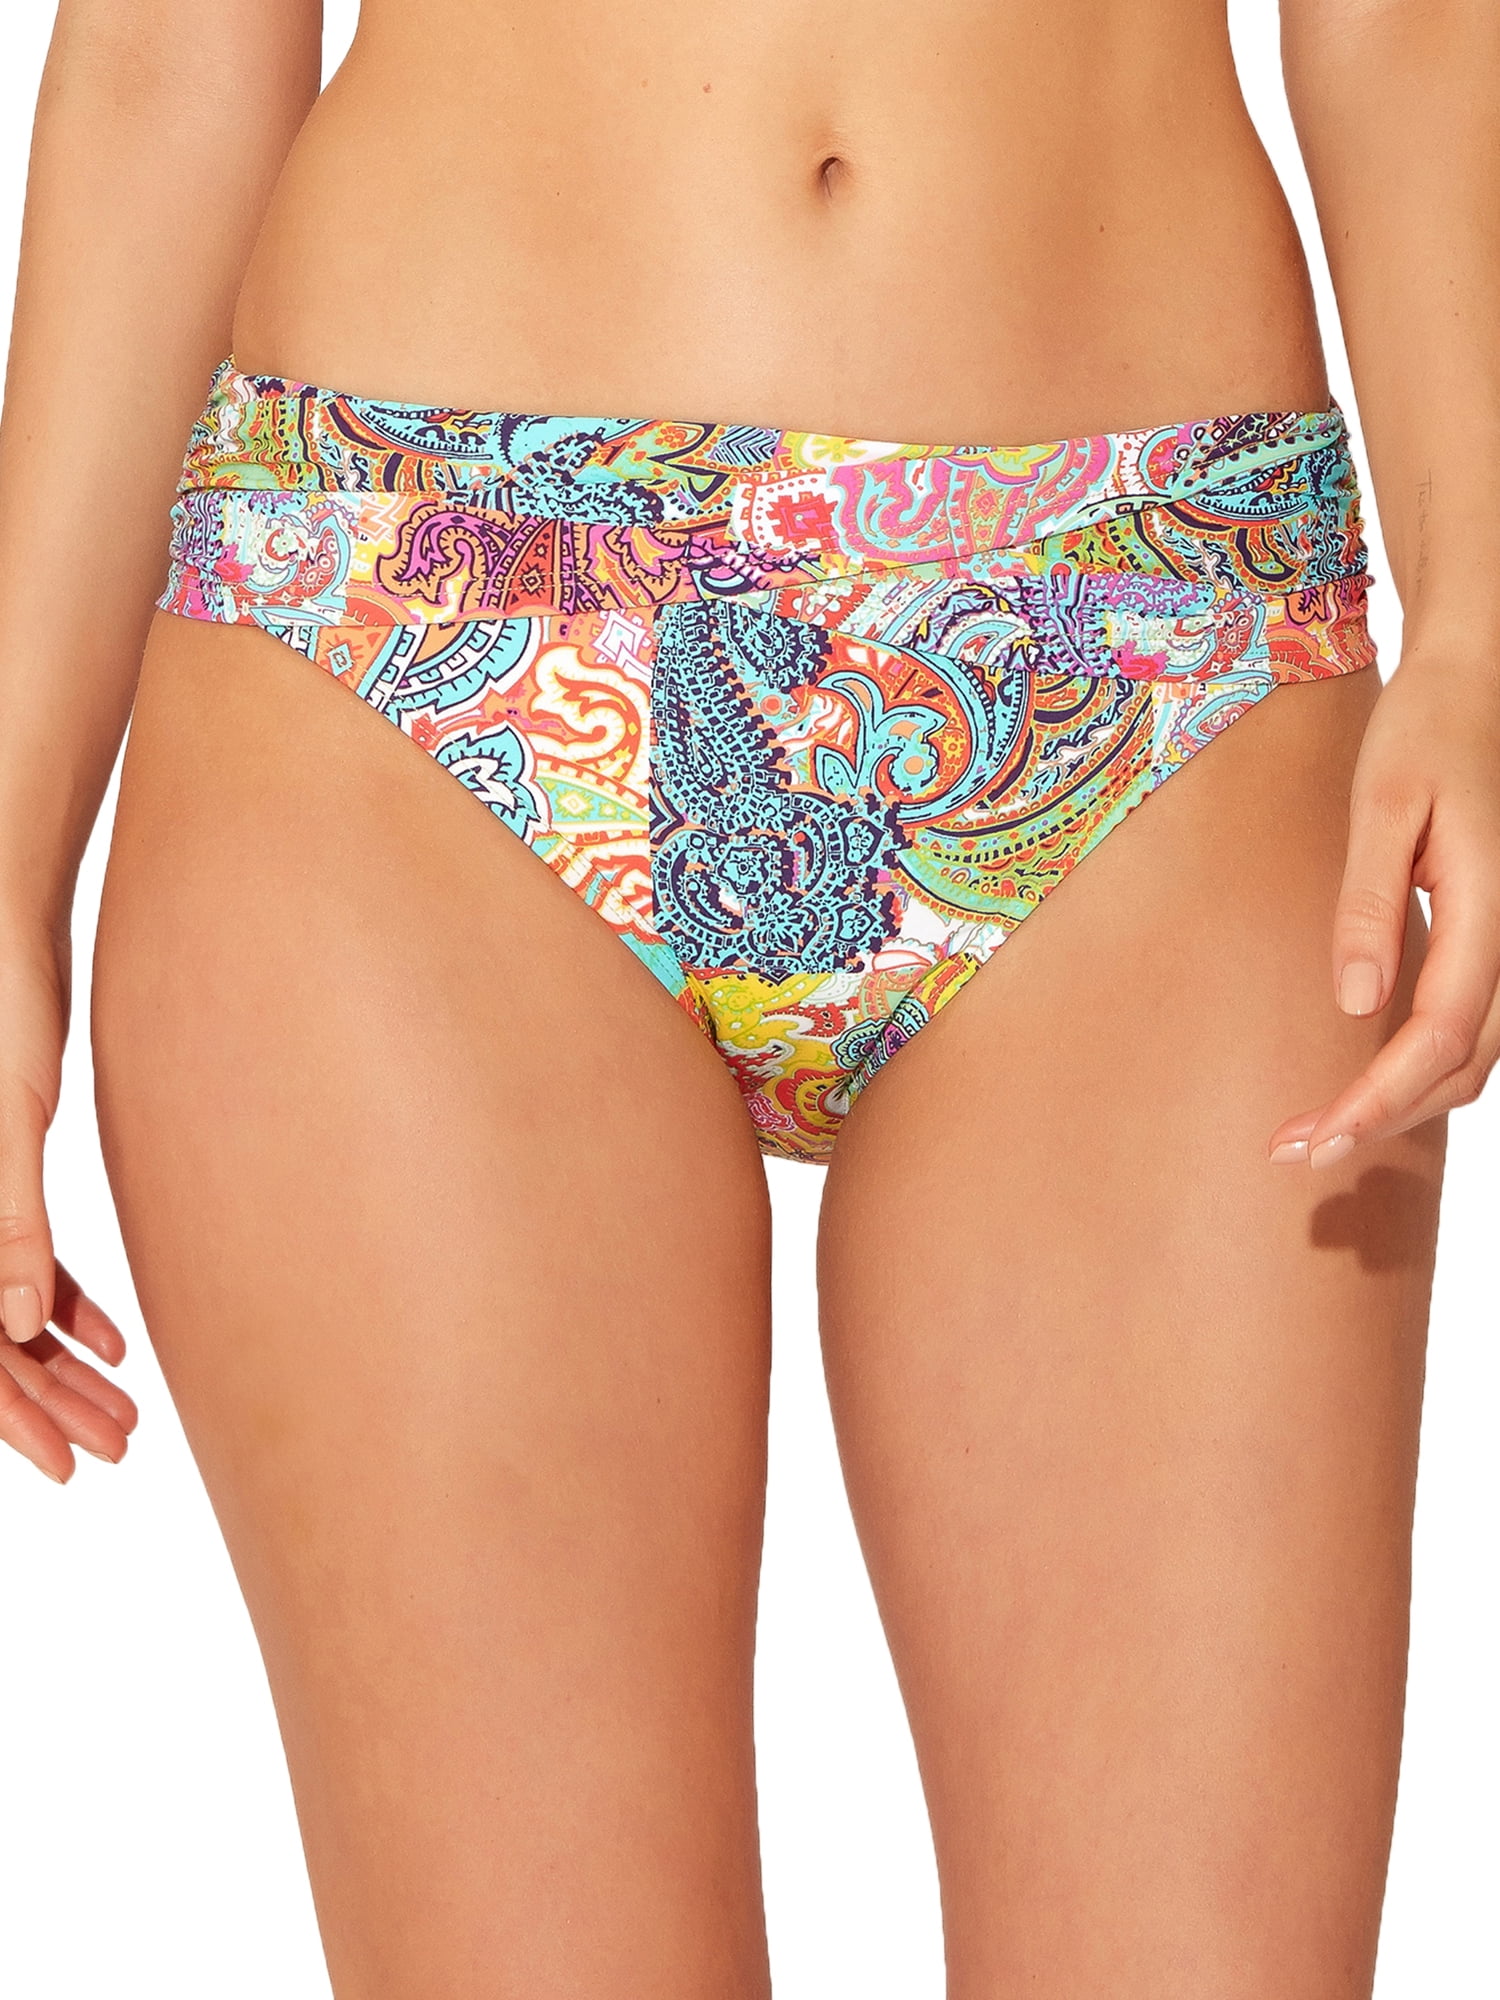 Yajiemen Womens Plus Size Tankinis Top Boho Floral Print Swimwear Bathing Suits Beachwear Swimsuit Triangle Briefs